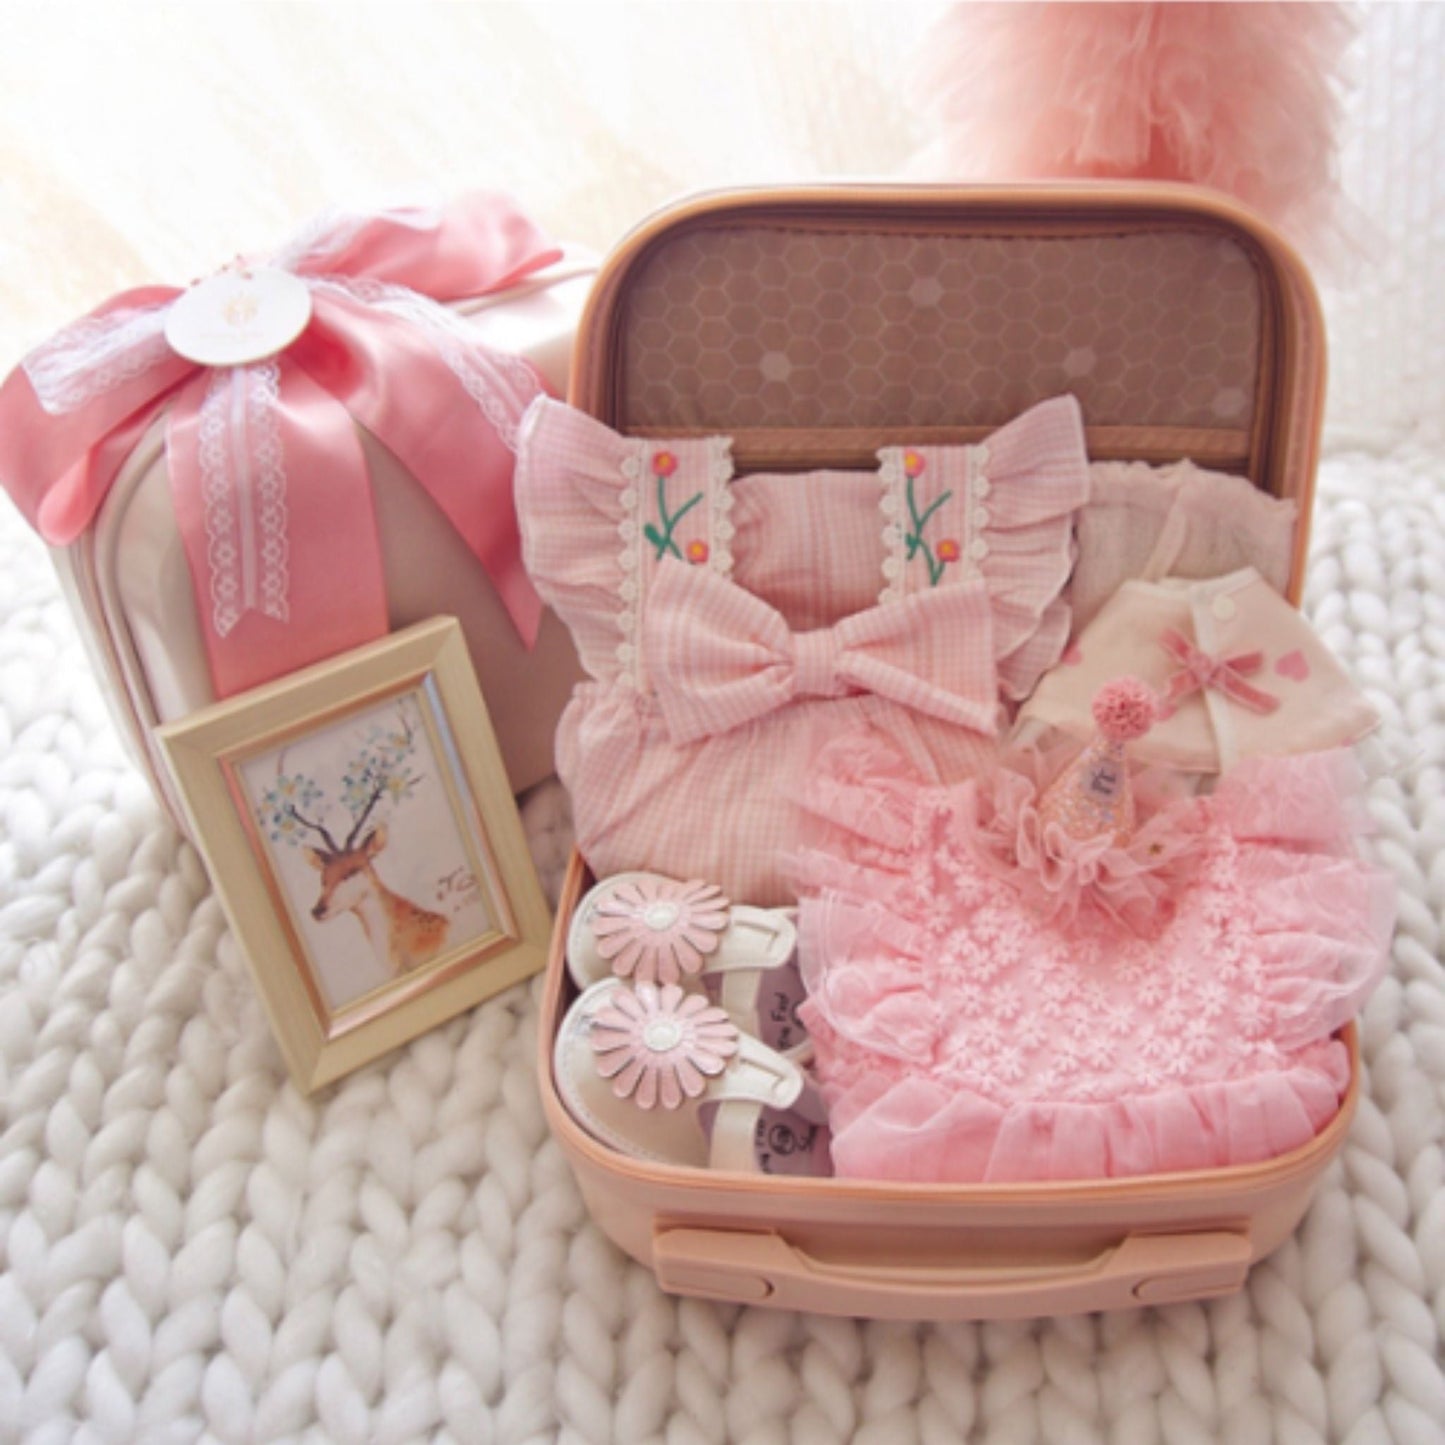 Pretty Pink Baby Girl Baby Birthday Gift Set 12-18 Months